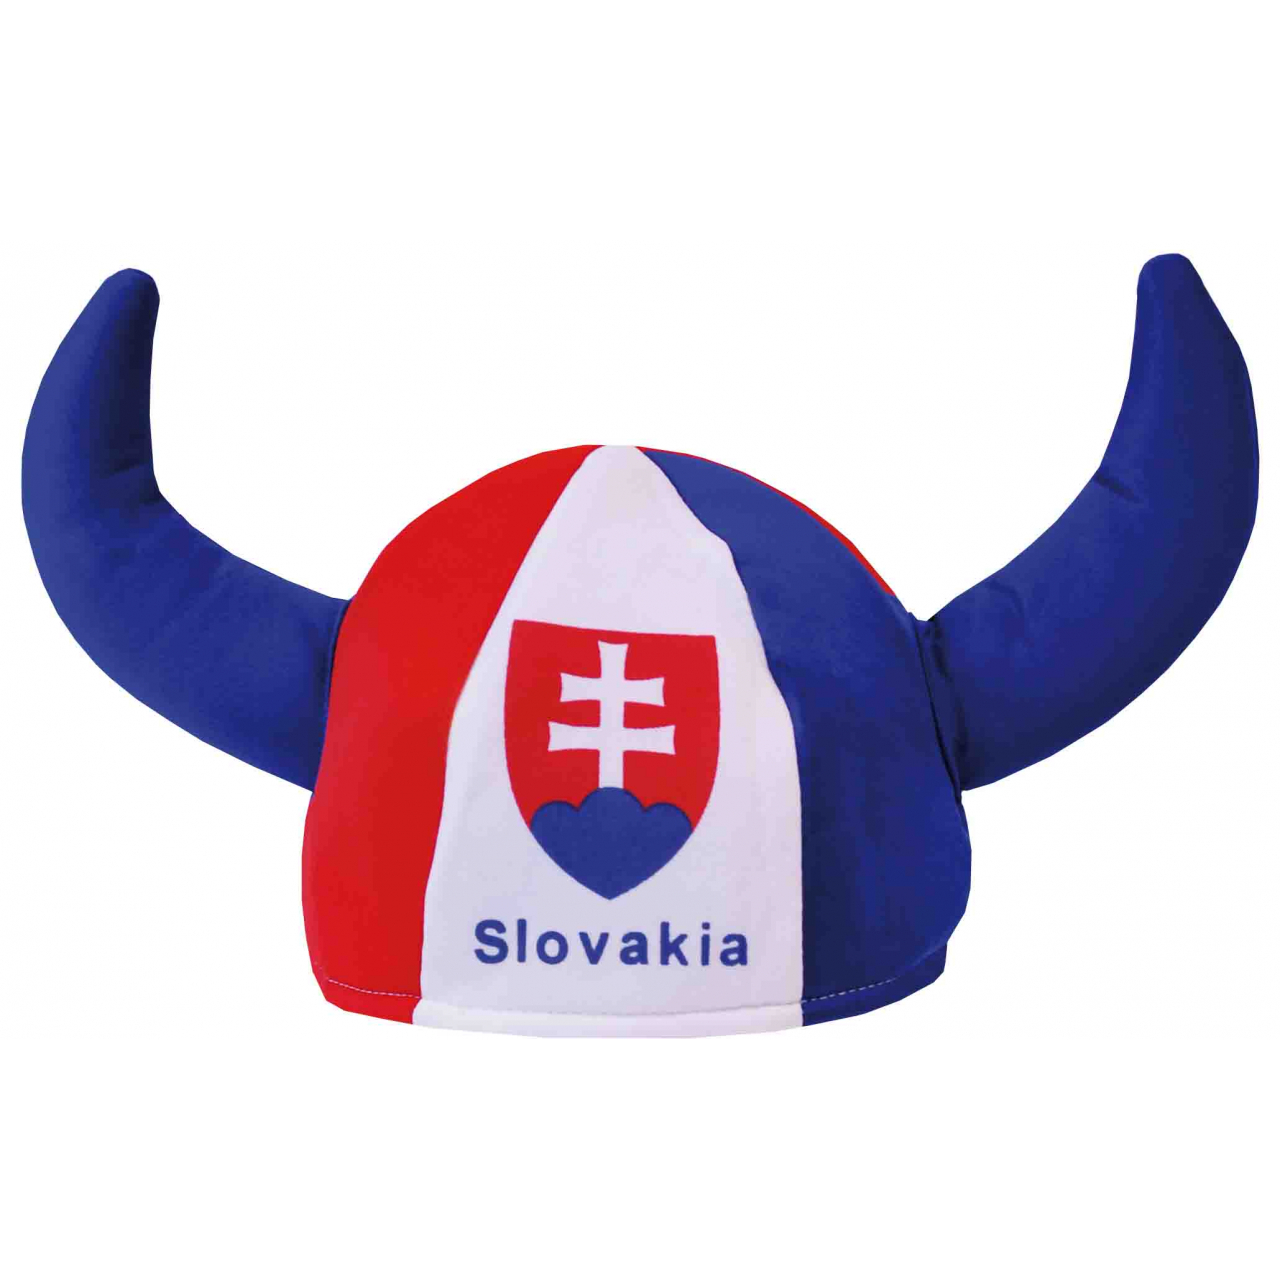 Klobouk s rohy a vlajkou Slovensko Slovakia - barevný